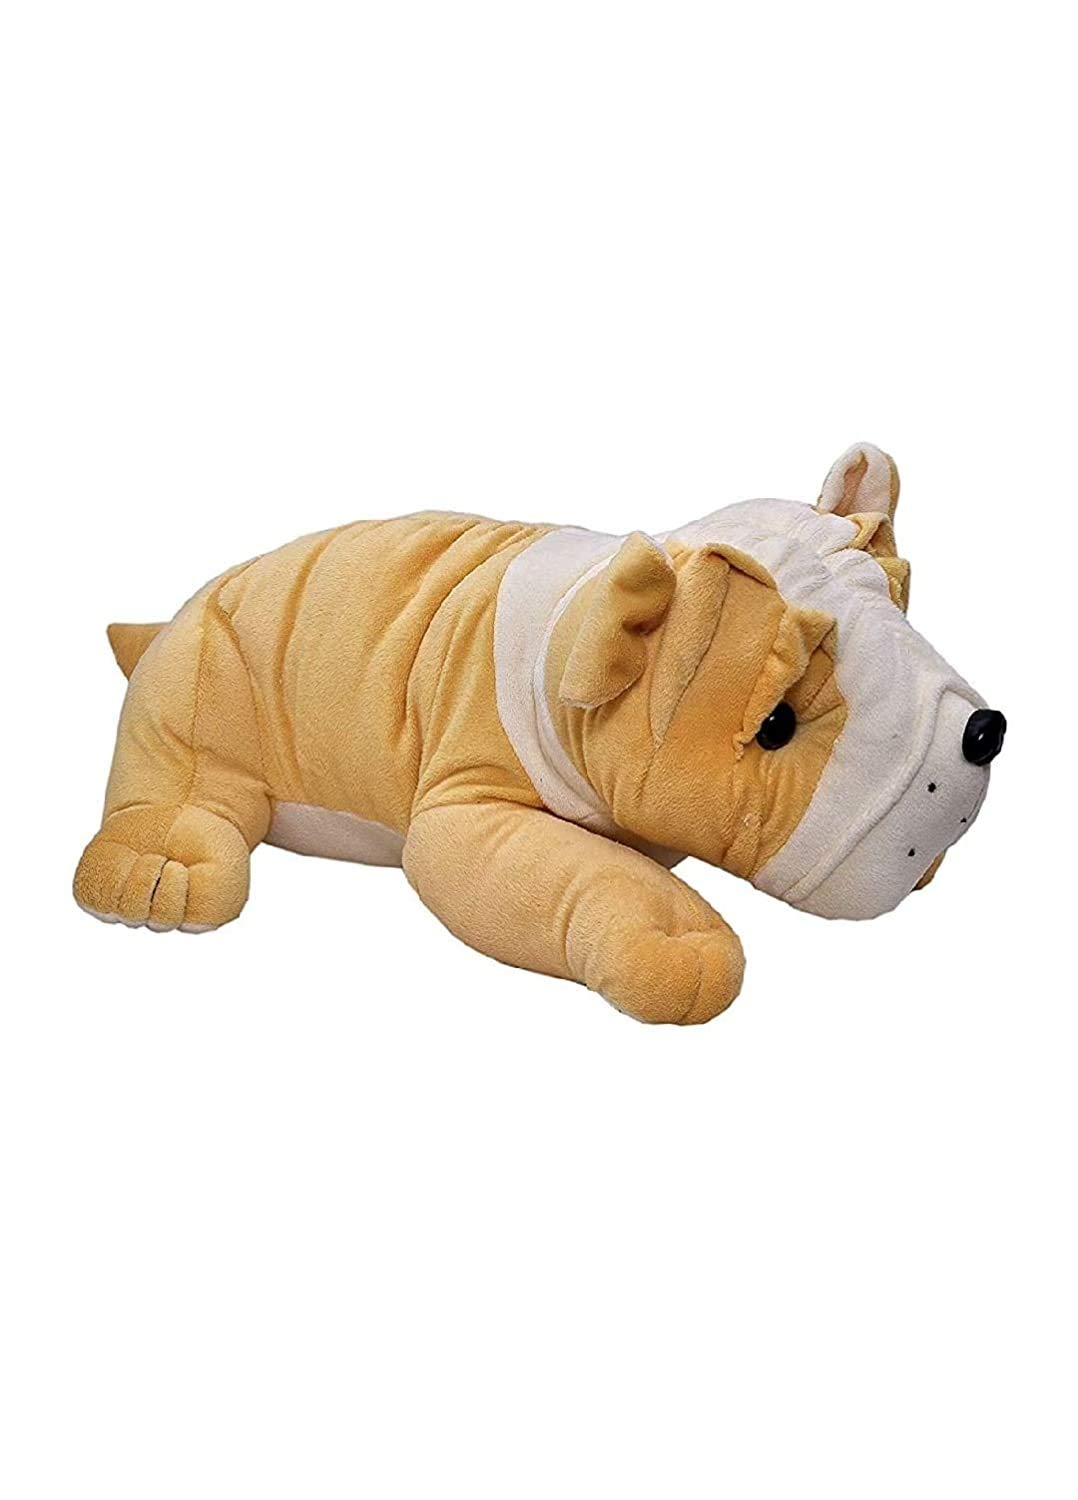 FUN ZOO Soft Plush Stuffed Cute Bull Dog Brown White Soft Toy for Kids Boys Girls Return Gift Decorative Item Size